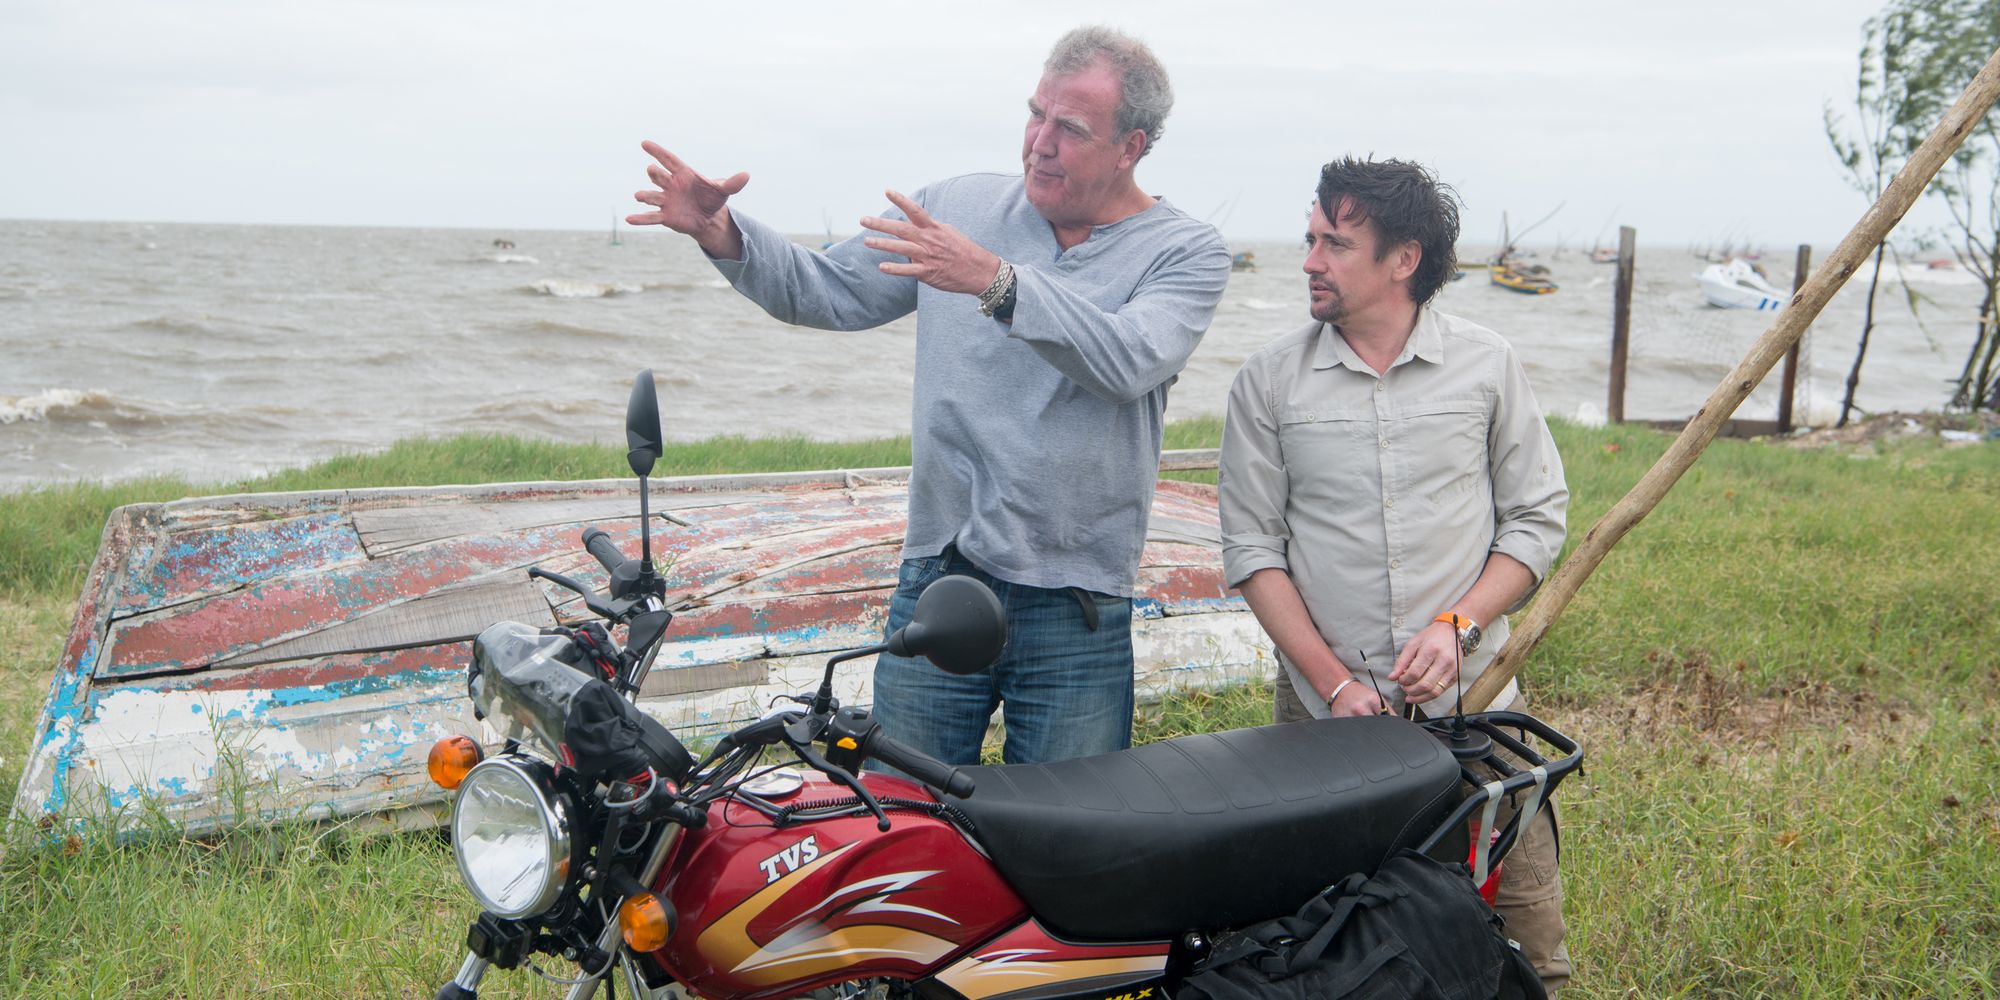 Jeremy Clarkson and Richard Hammond in The Grand Tour Season 2